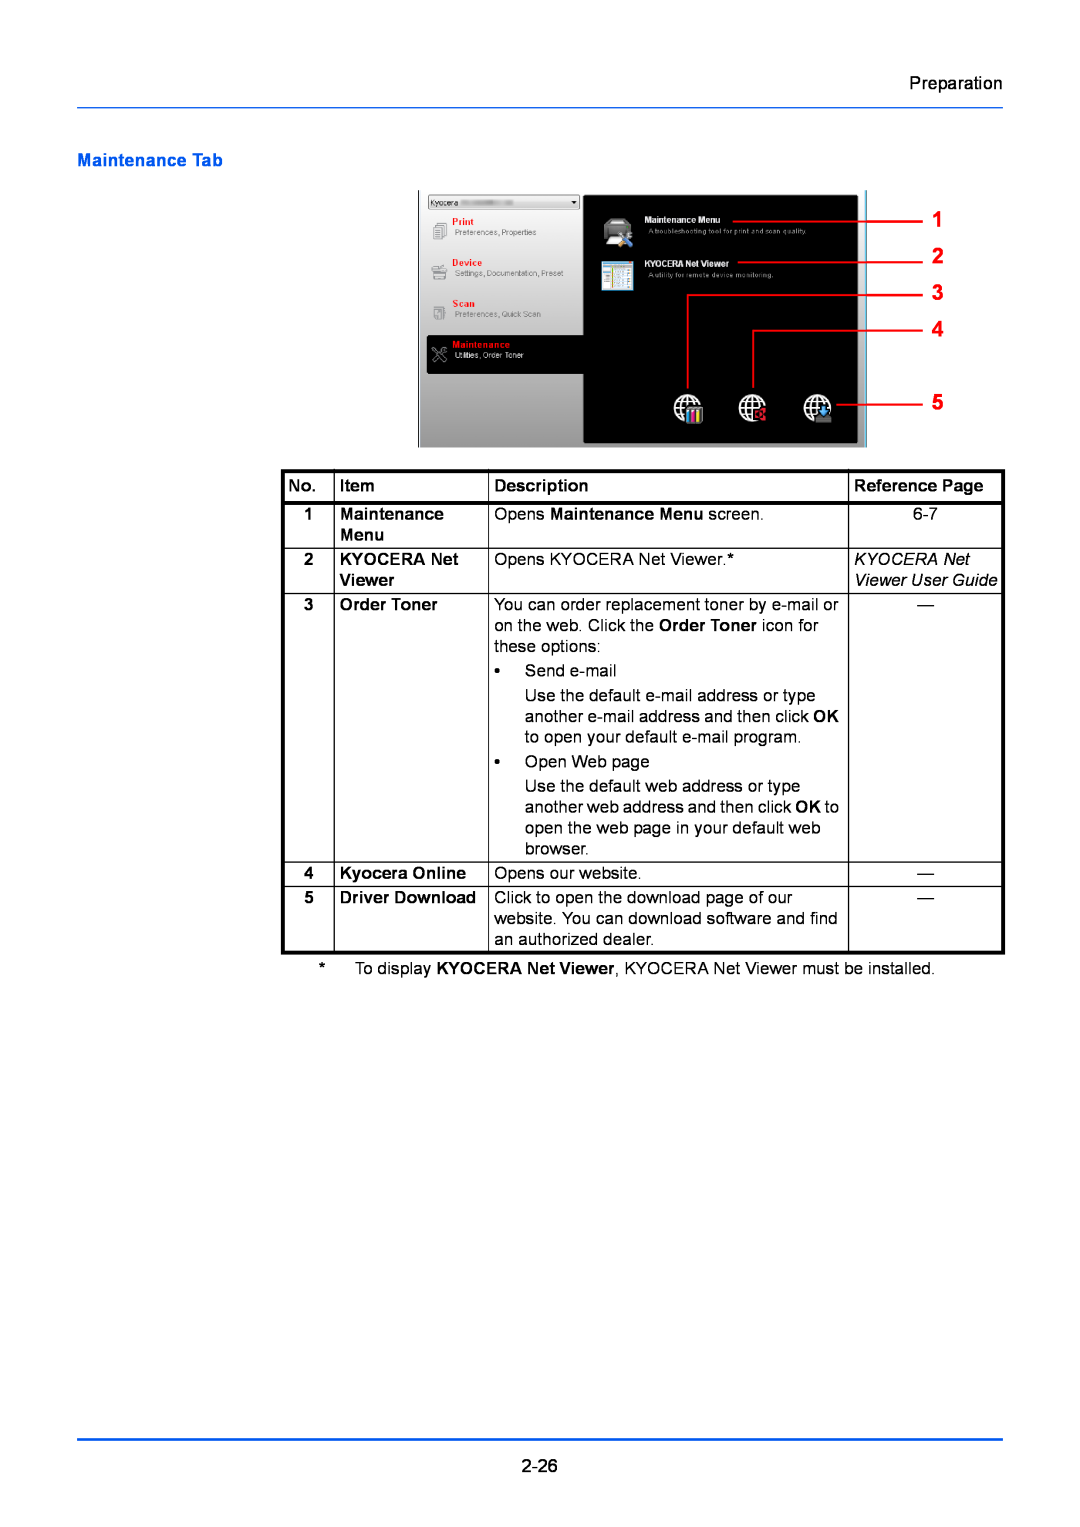 Kyocera FS-1020MFP, FS-1220MFP manual KYOCERA Net, Viewer User Guide, Maintenance Tab 